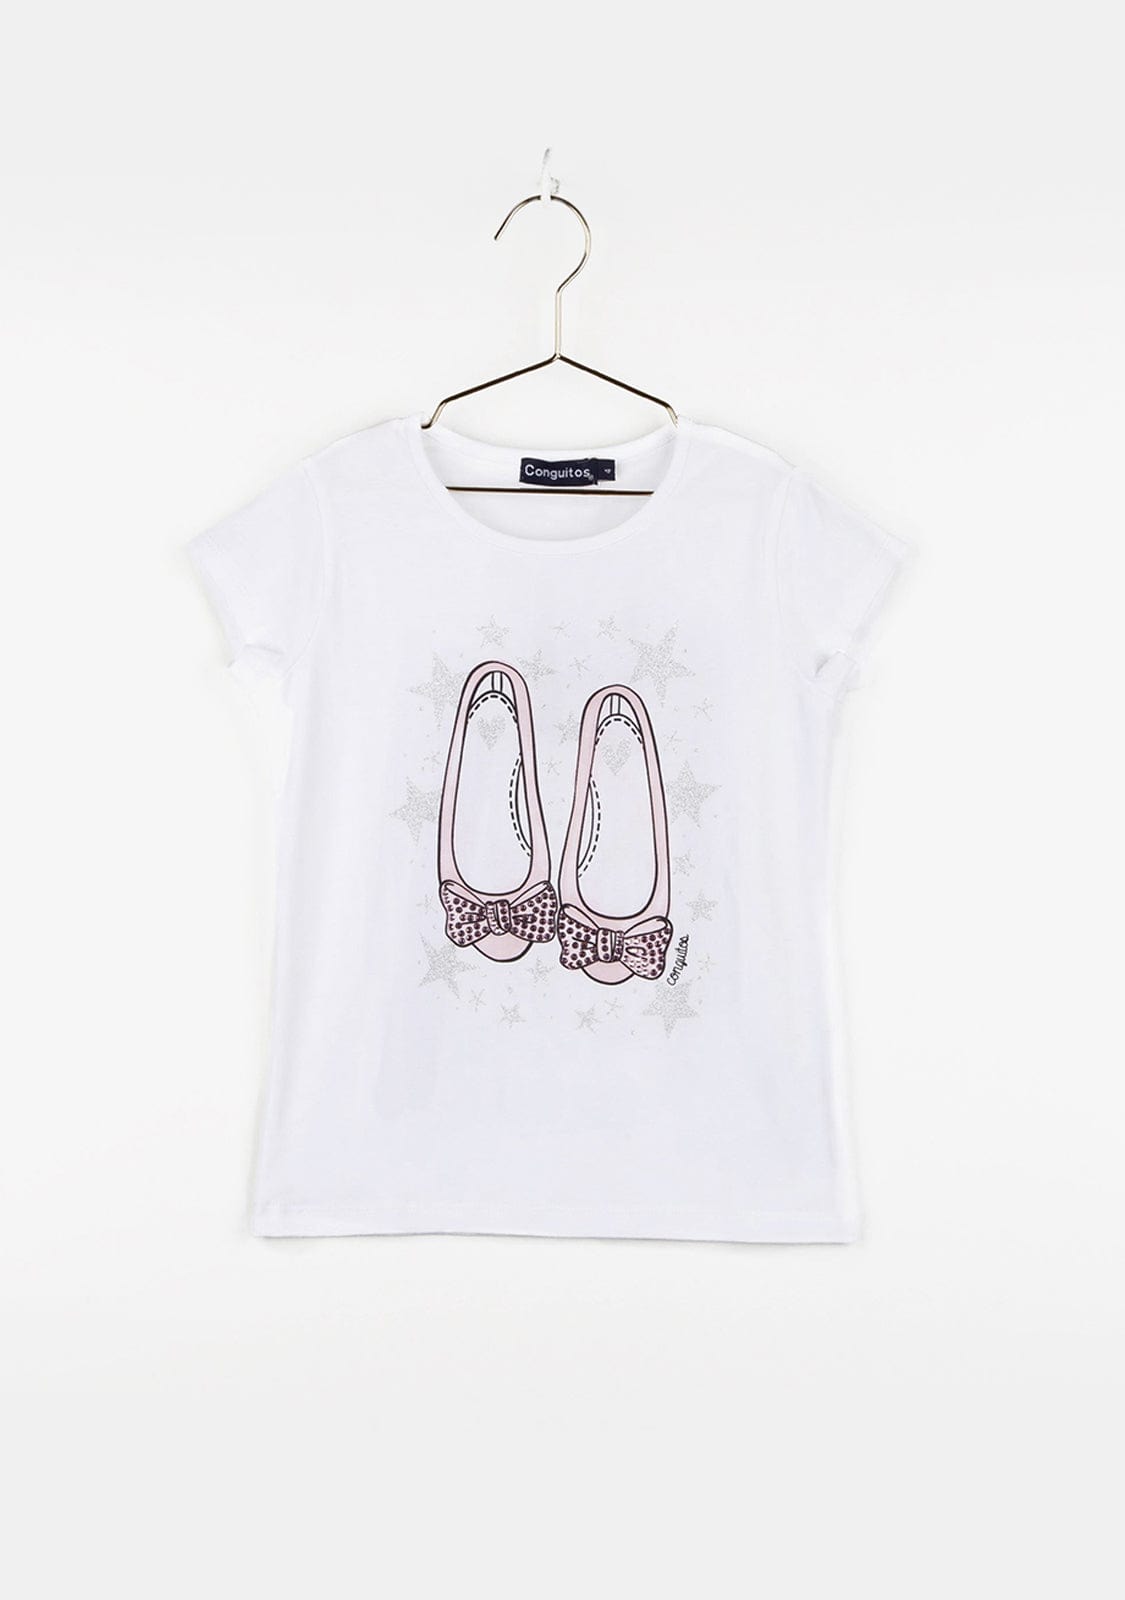 CONGUITOS TEXTIL Clothing Girl's "Ballerinas" Pink T-shirt